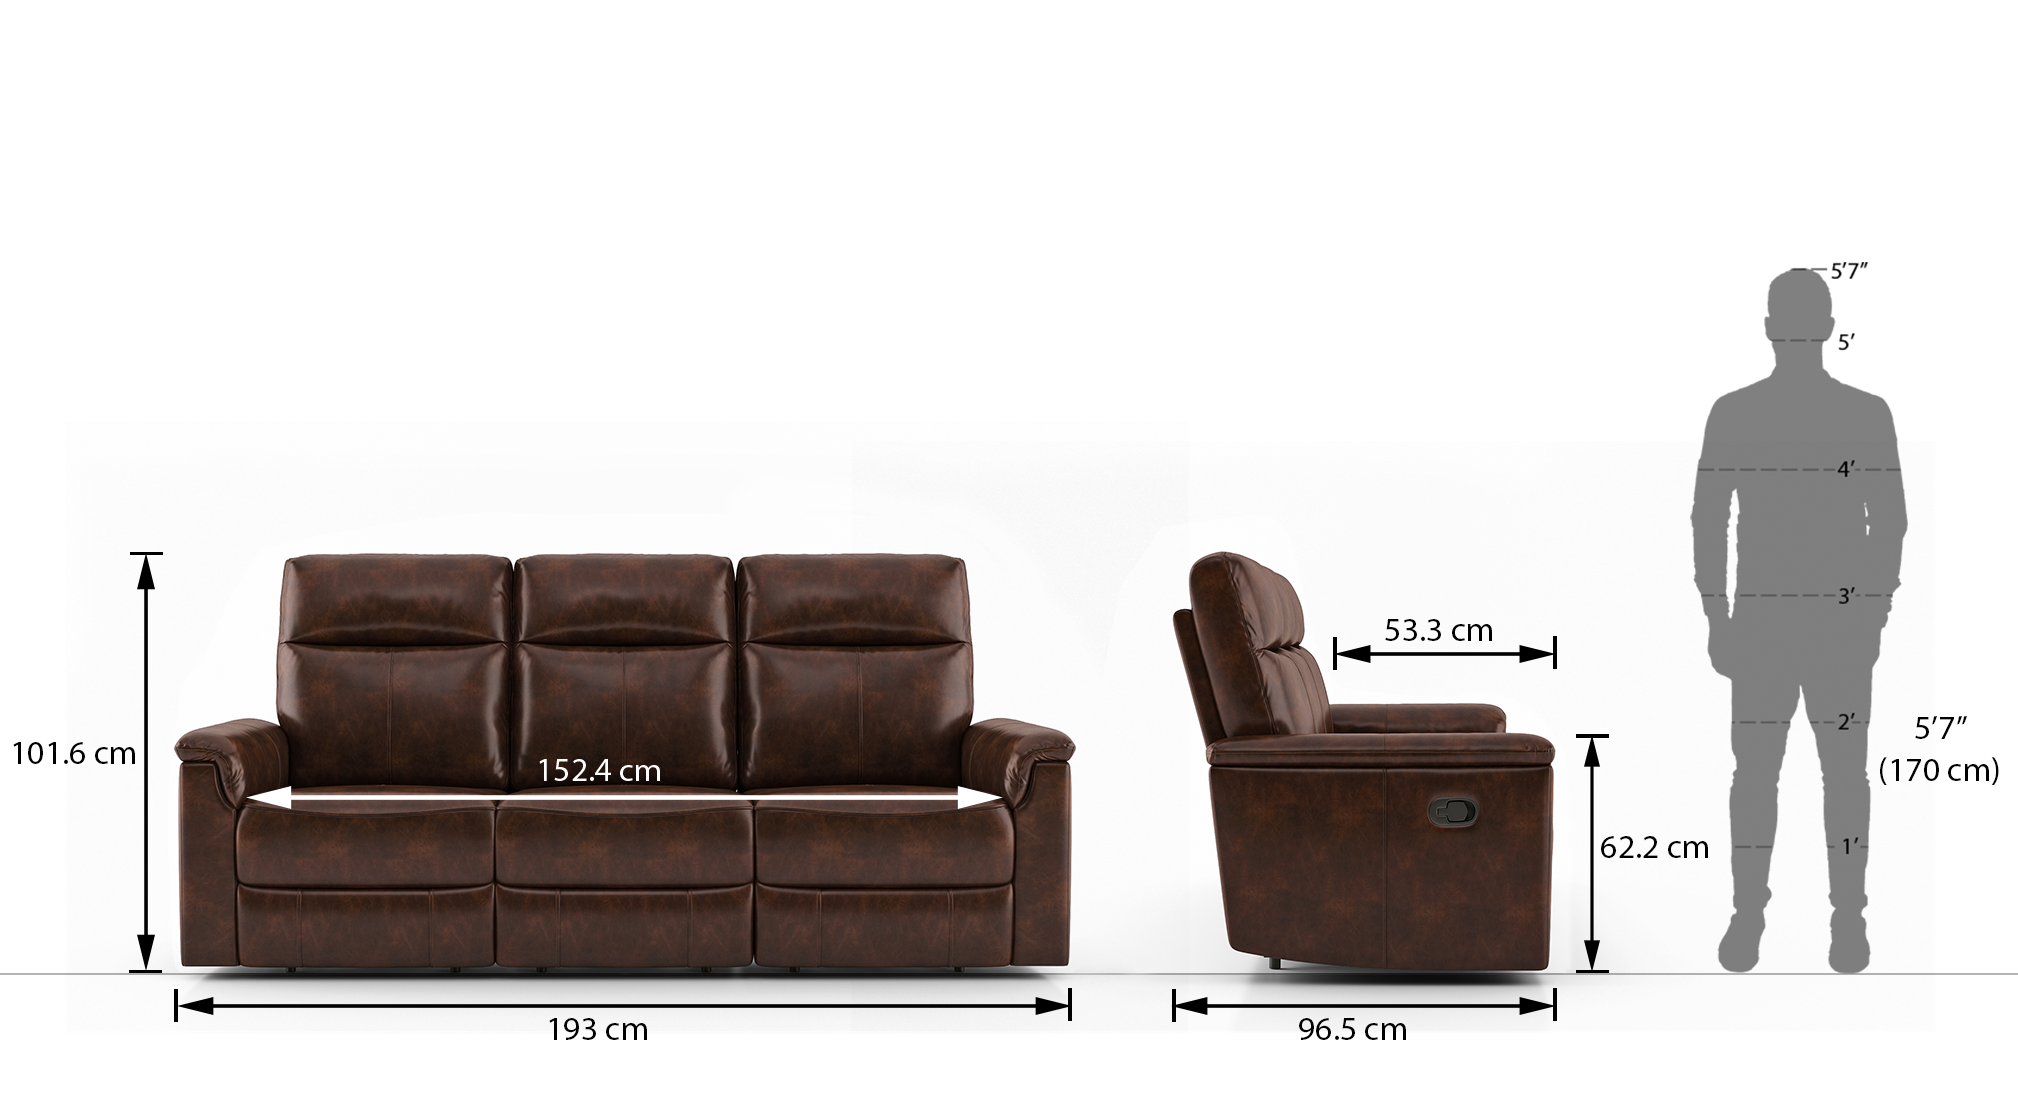 Barnes recliner 3 seater color tuscan brown 9